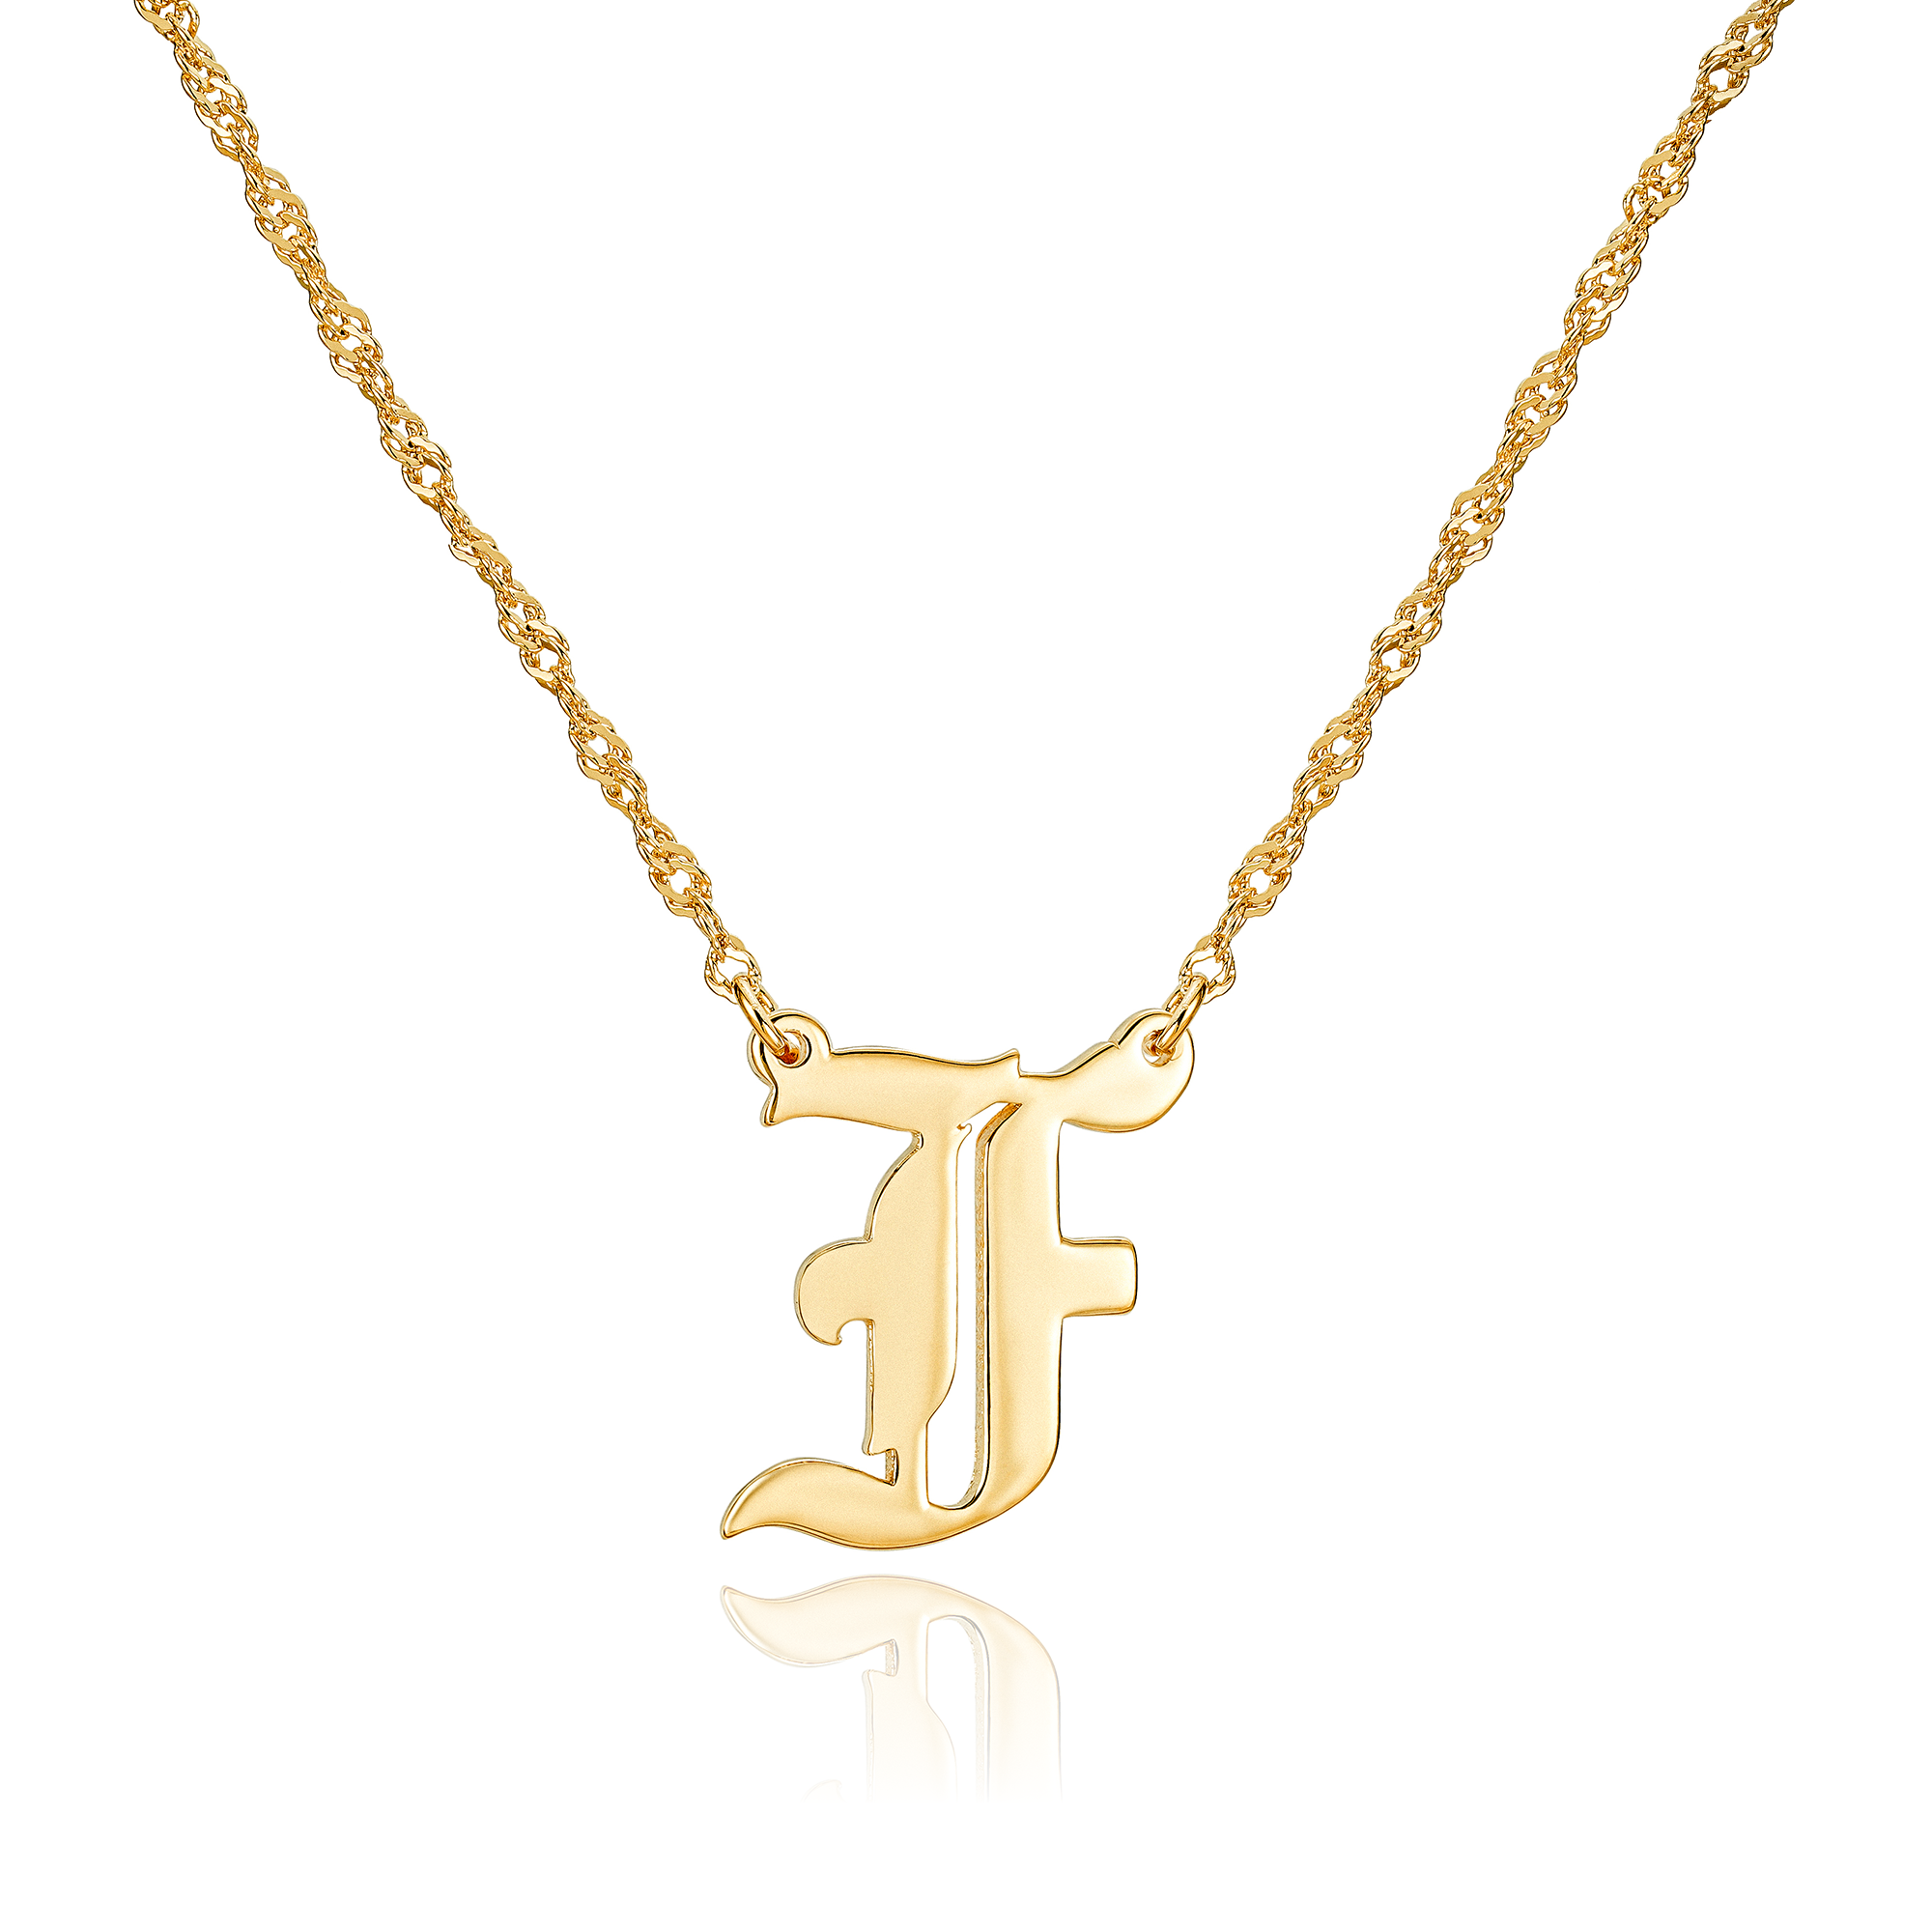 Buy J Initial Necklace Cursive j Initial Gold Pendant Necklace Monogram  Necklace for Women Personalized Gold Initial Necklace for Her Online in  India - Etsy